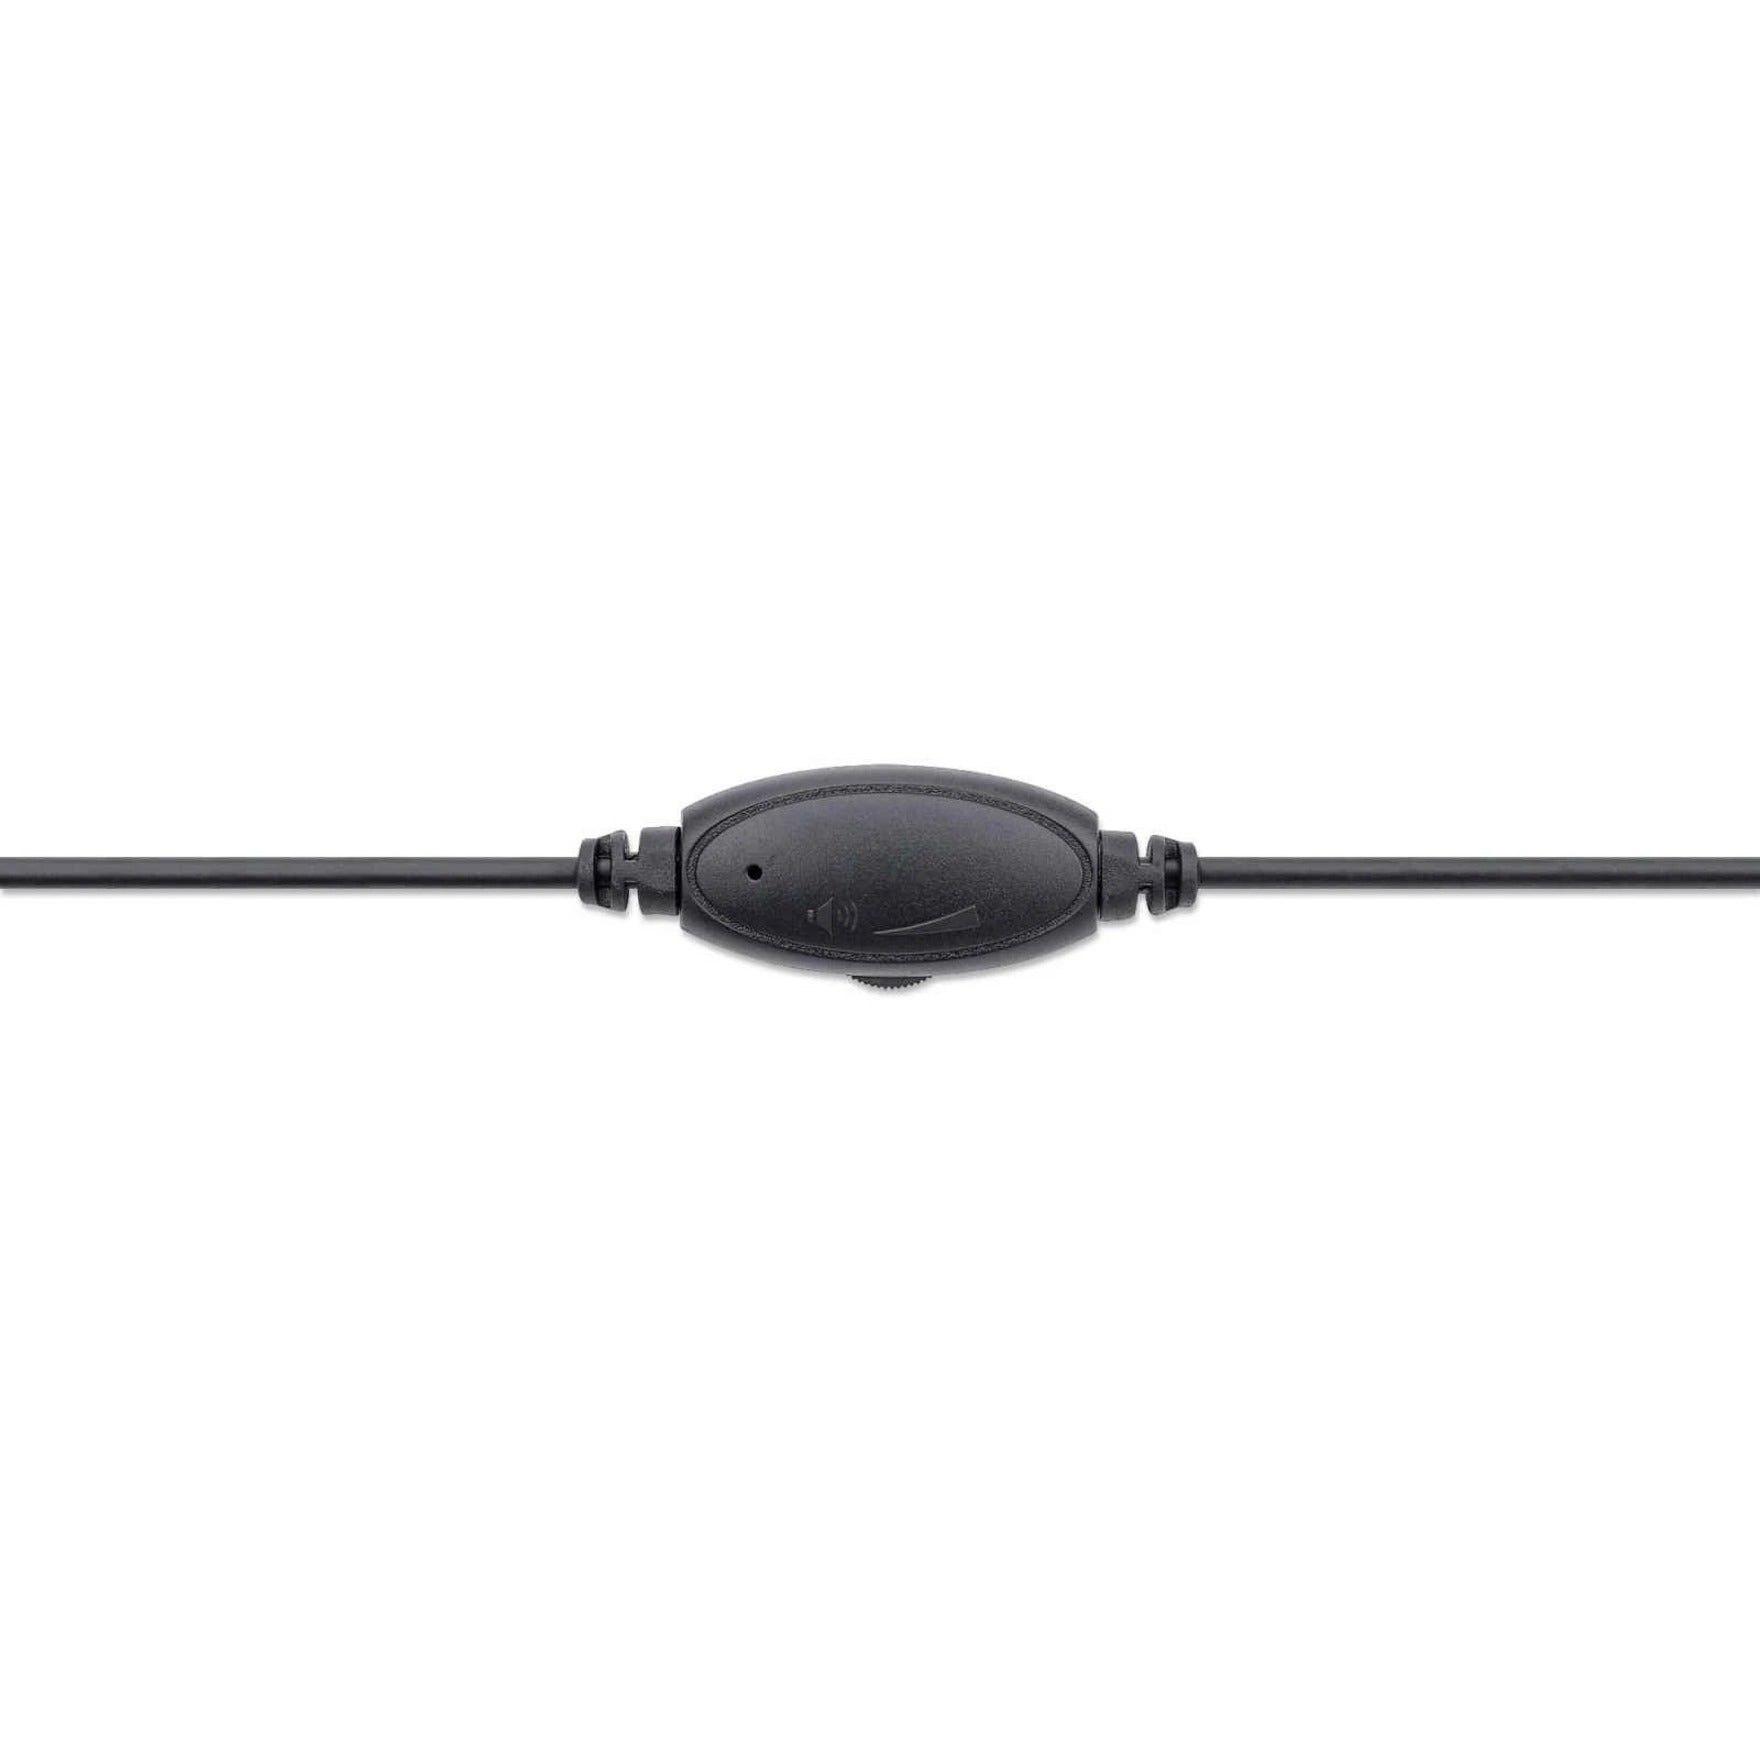 Manhattan 179867 Mono USB Headset, Lightweight, Hands-free, Adjustable Microphone